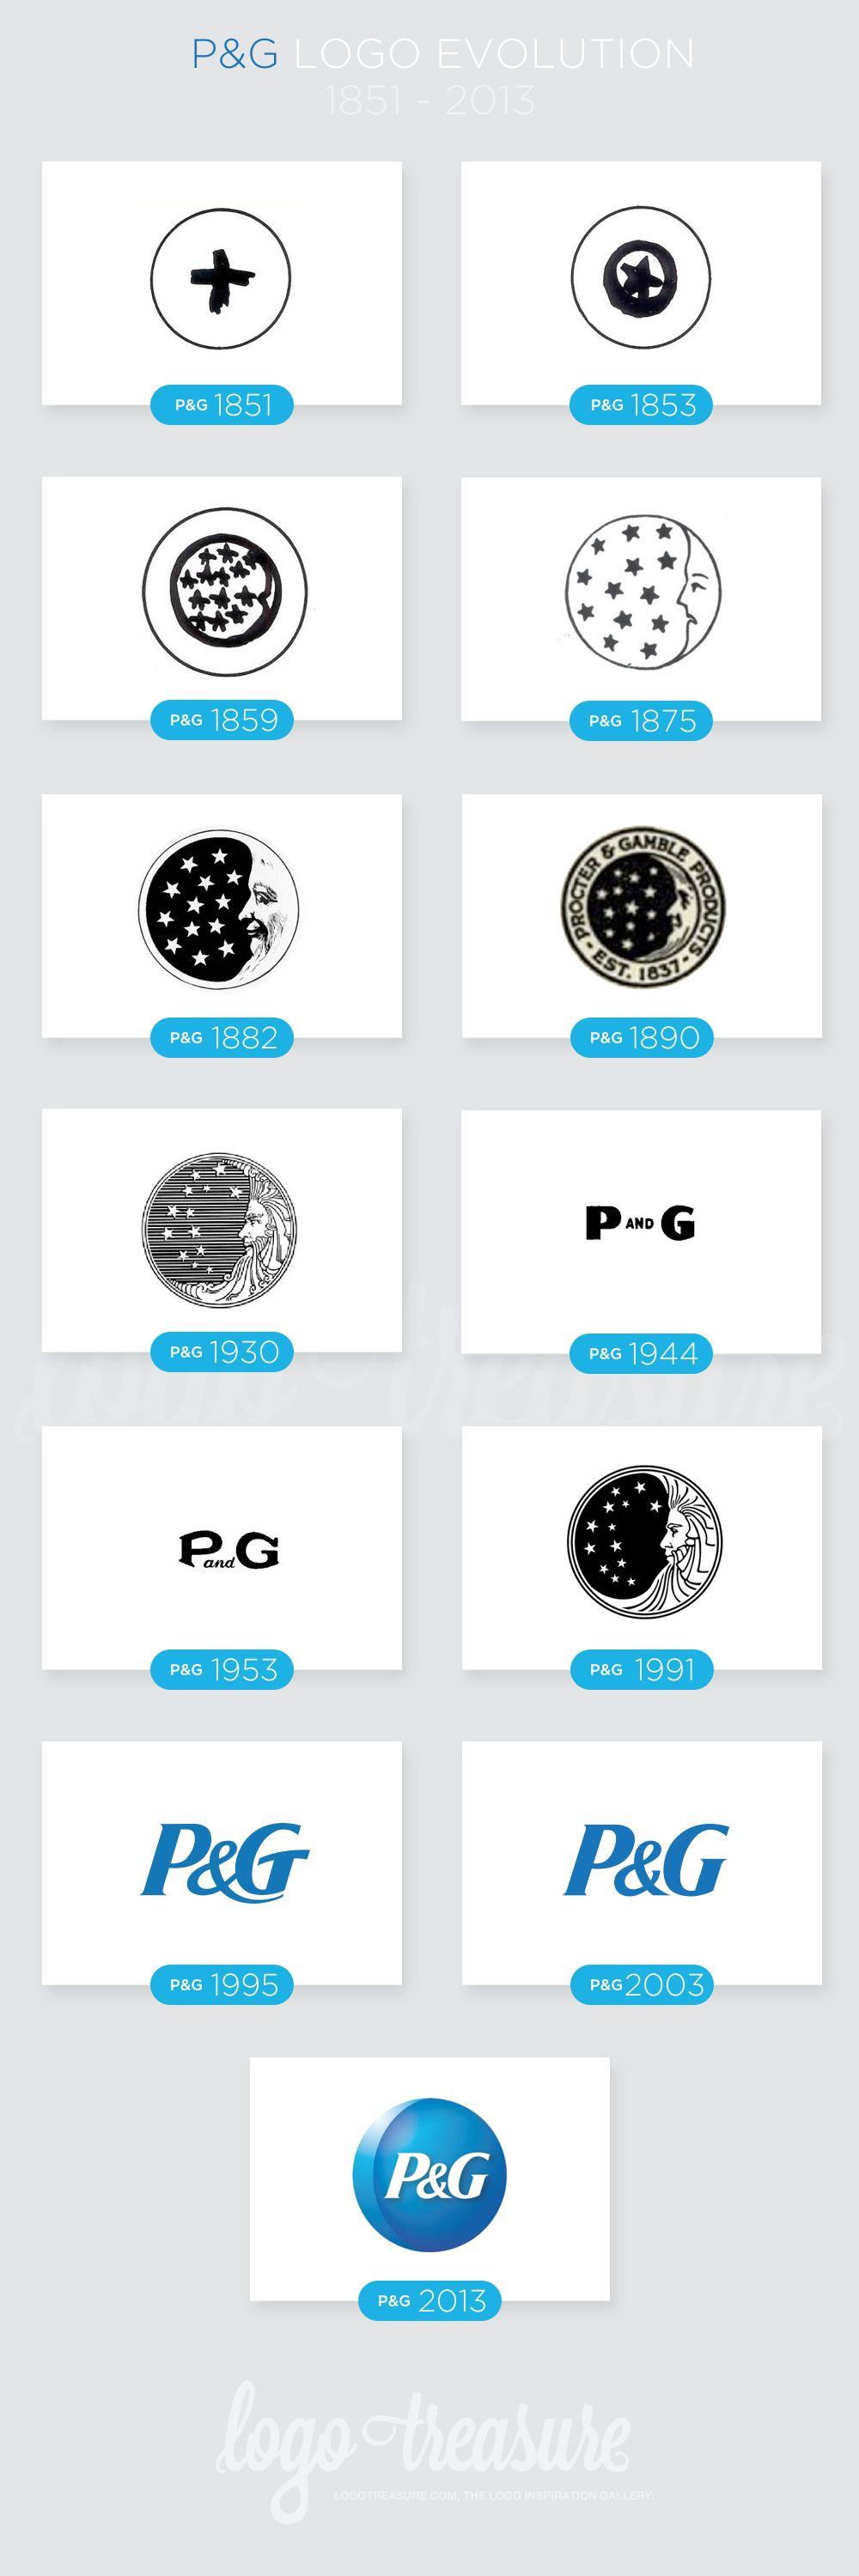 P&G Logo - Procter&Gamble Logo Evolution from 1851 to 2013 | Logotreasure